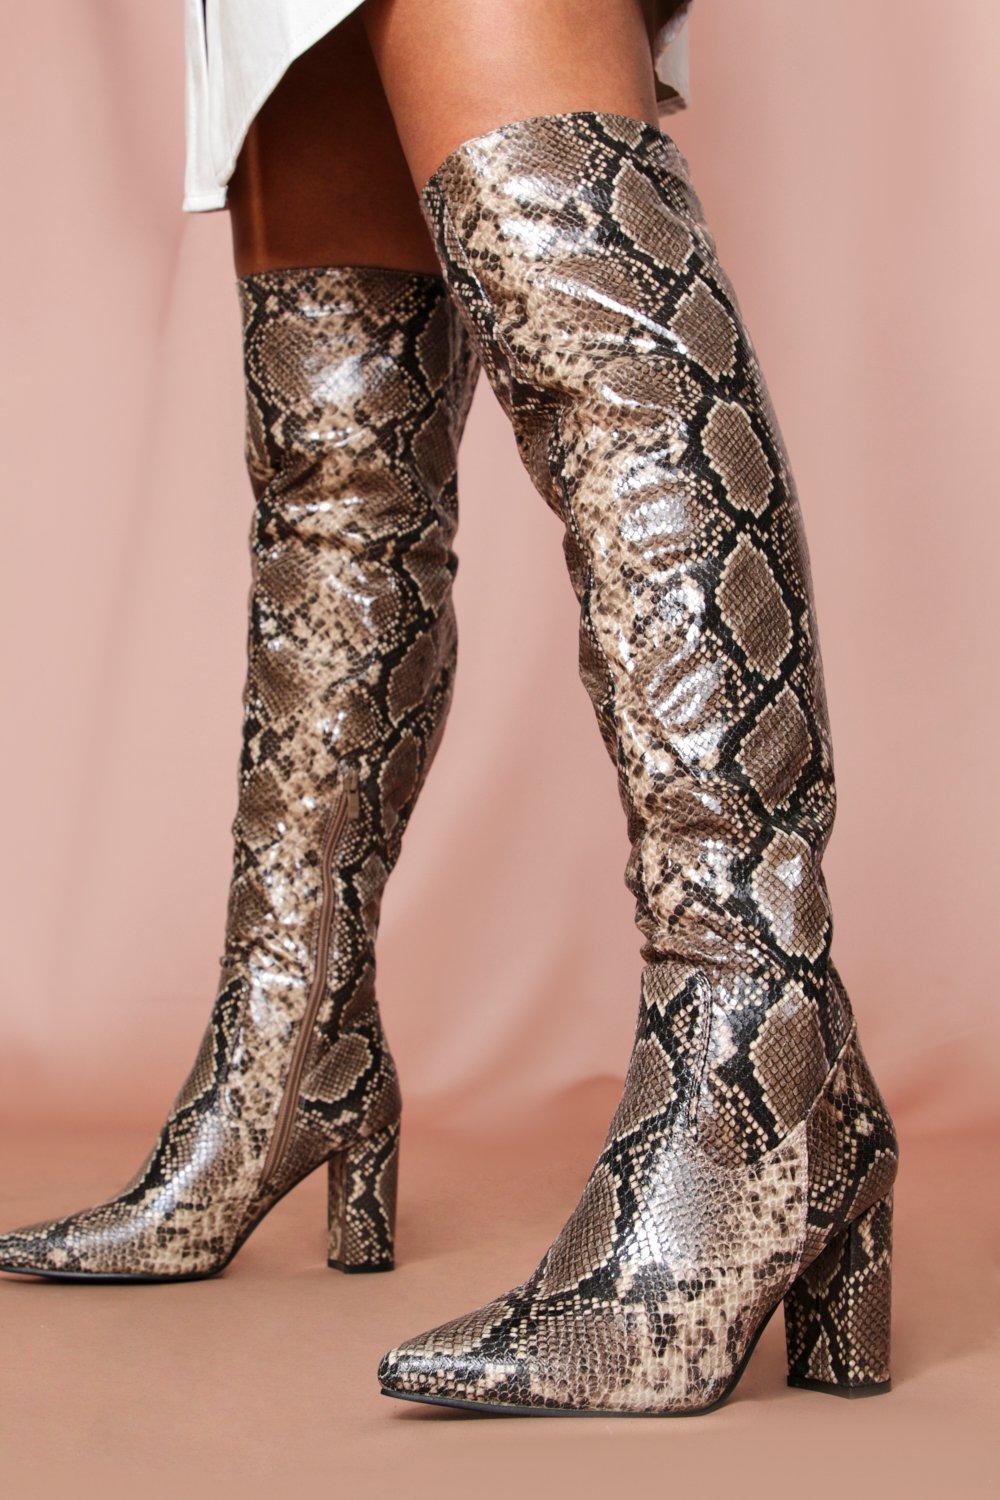 thigh high snakeskin boots